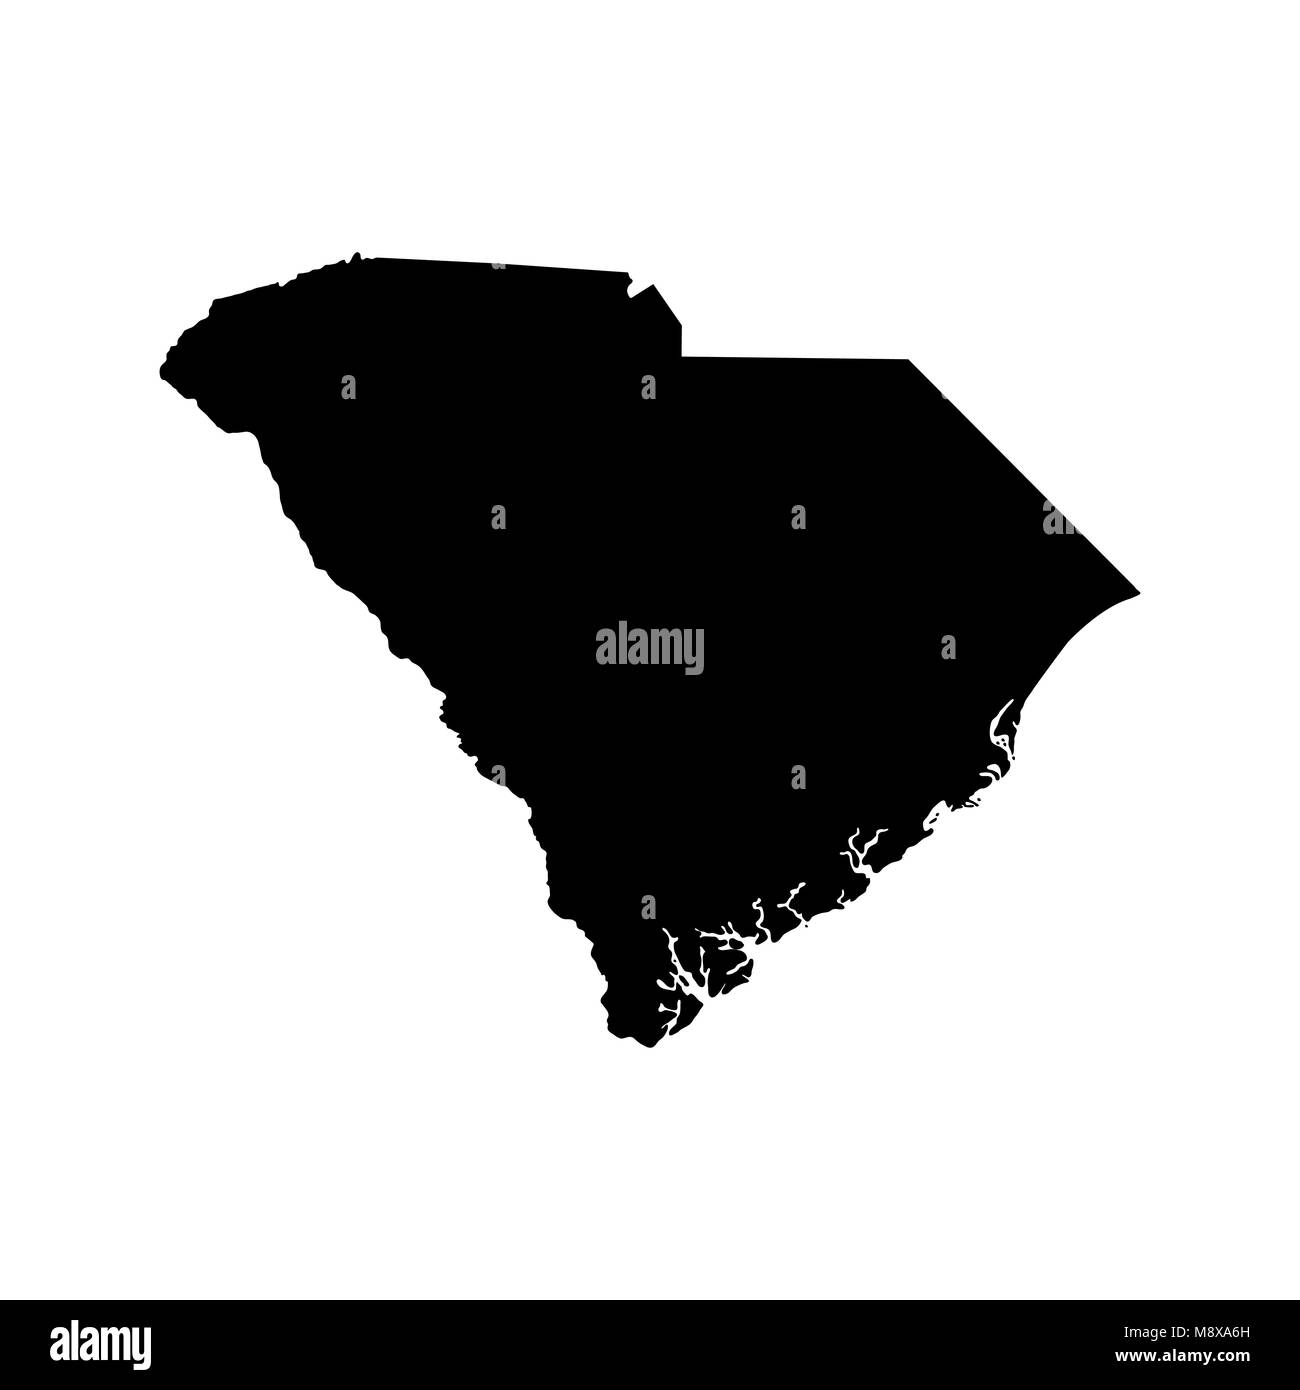 Karte der Bundesstaat South Carolina der Vereinigten Staaten Stock Vektor